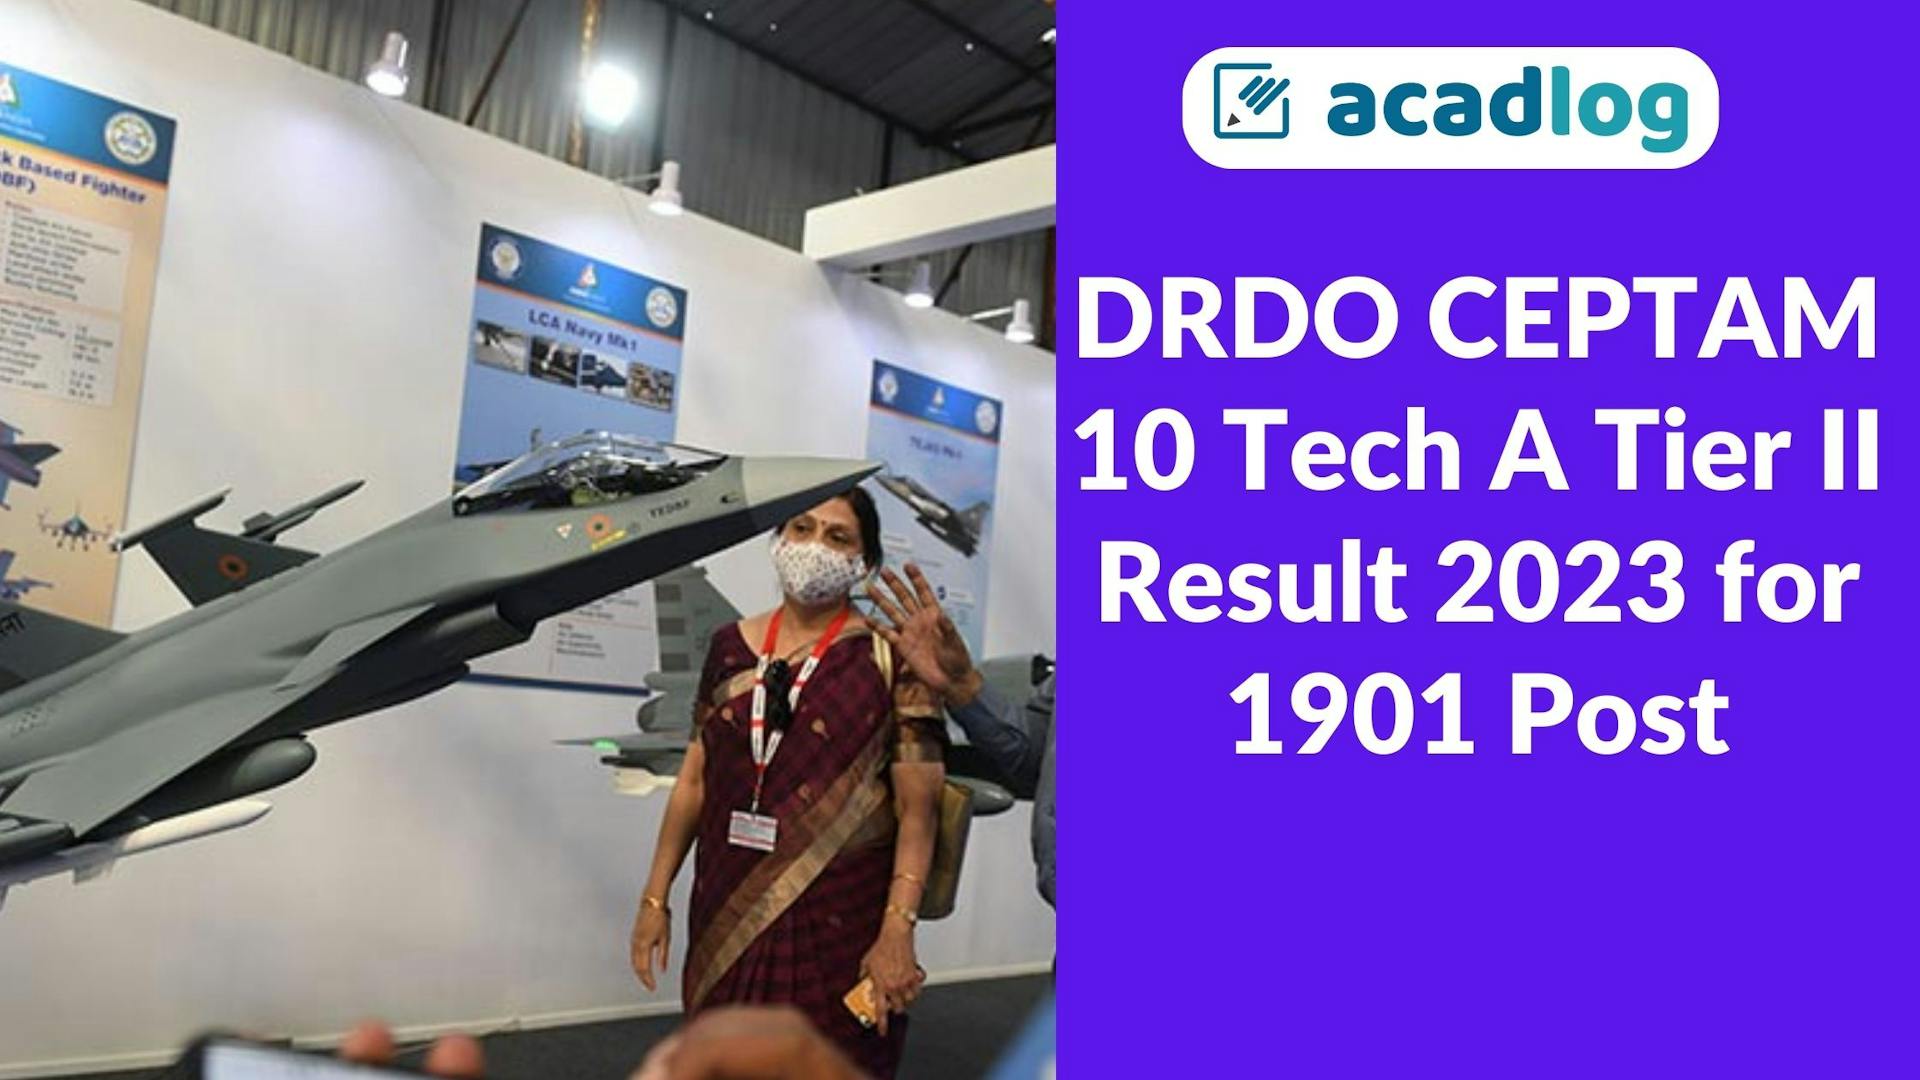 DRDO CEPTAM 10 Tech A Tier II Result 2023 for 1901 Post